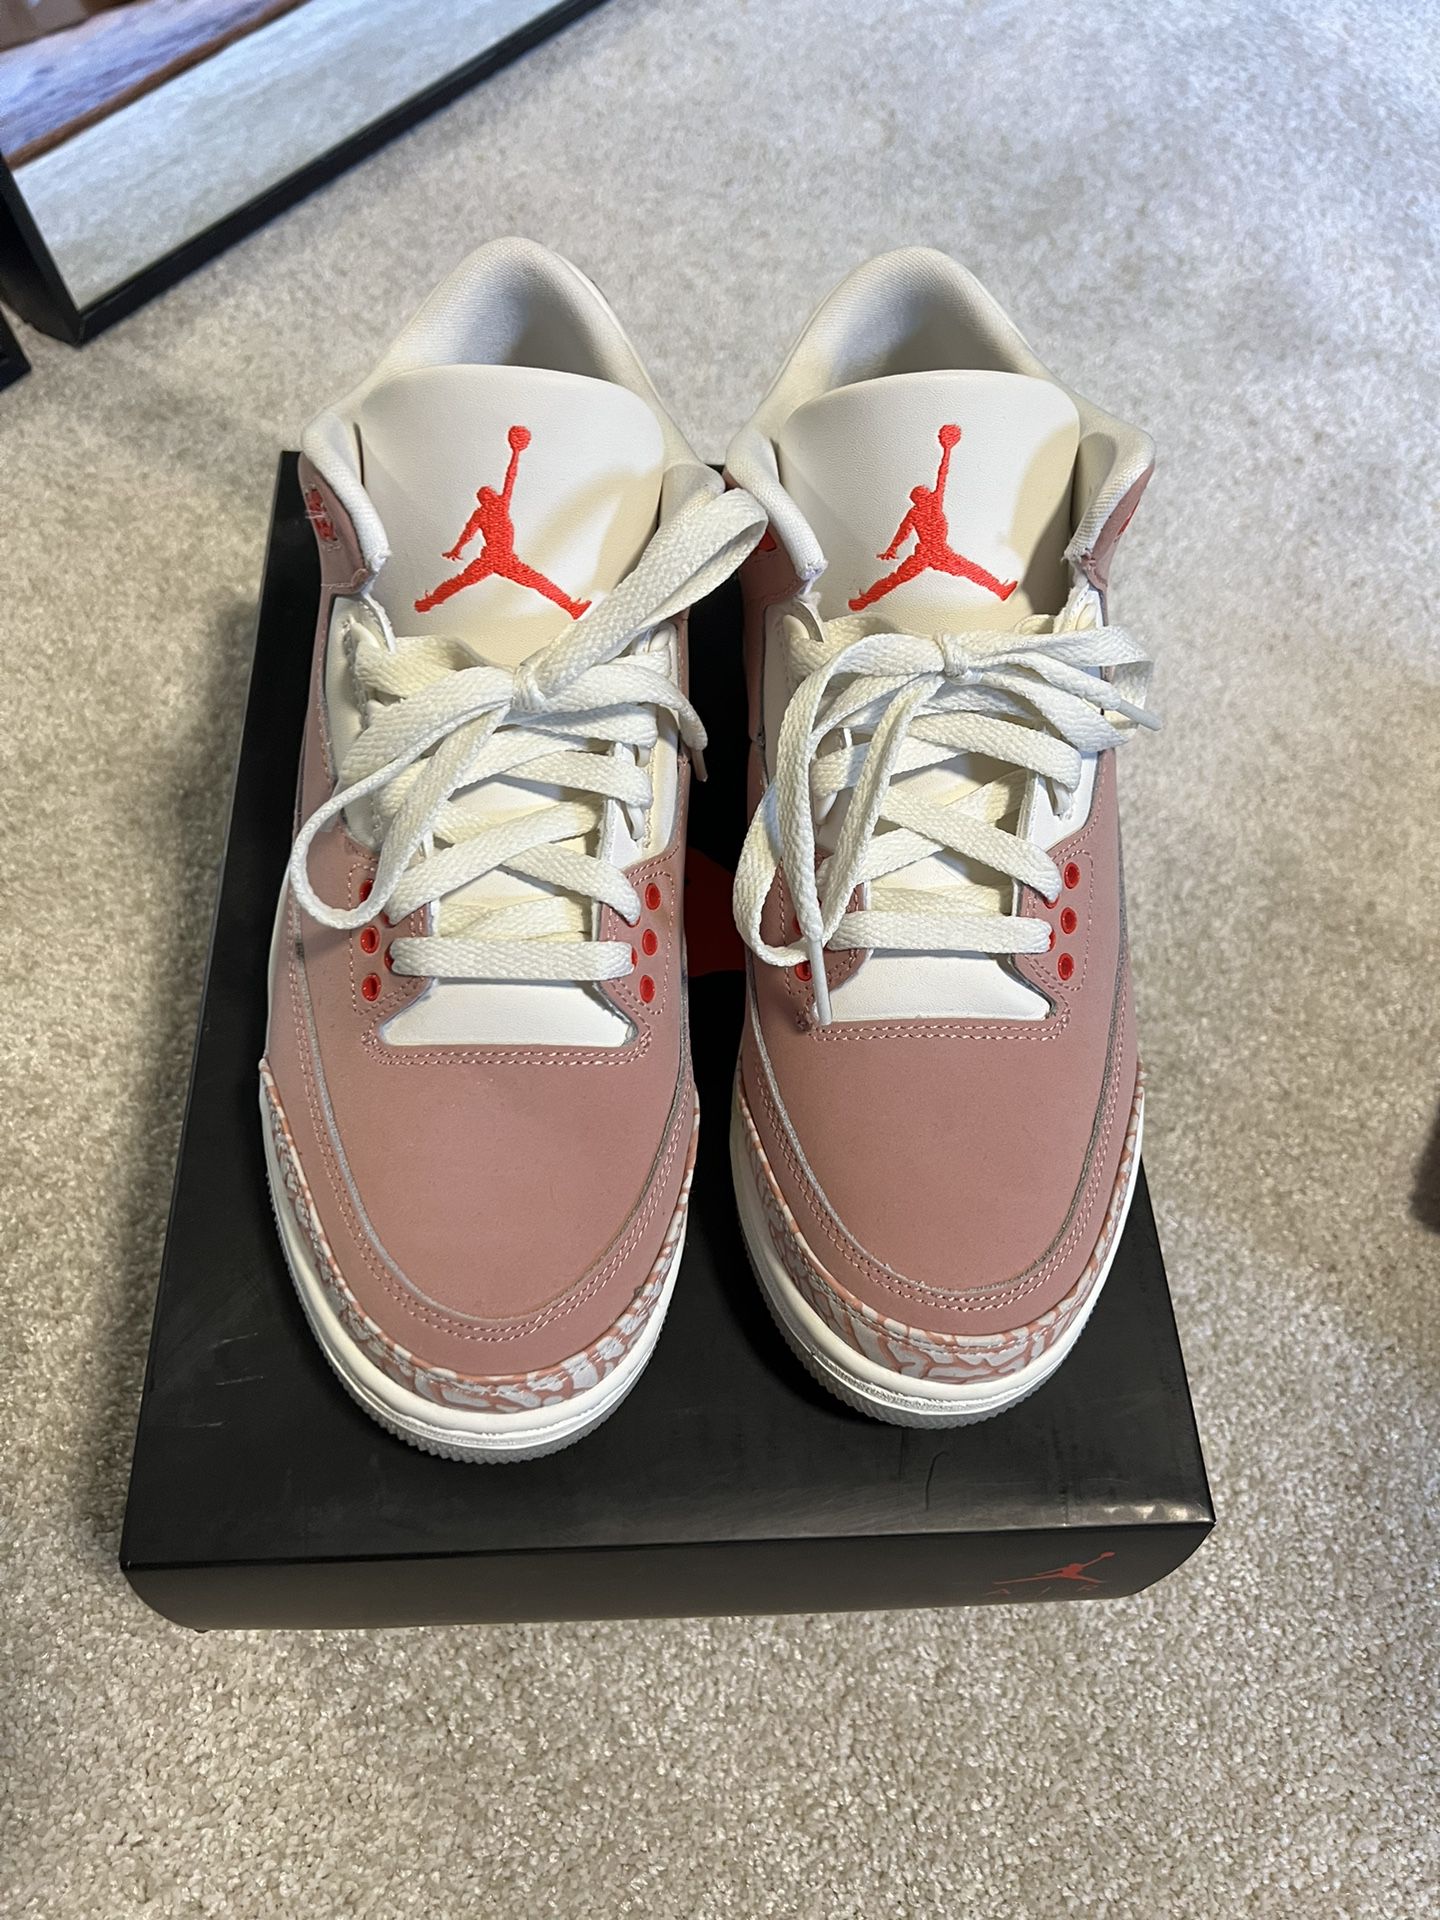 Women’s Air Jordan 3 Size 9 